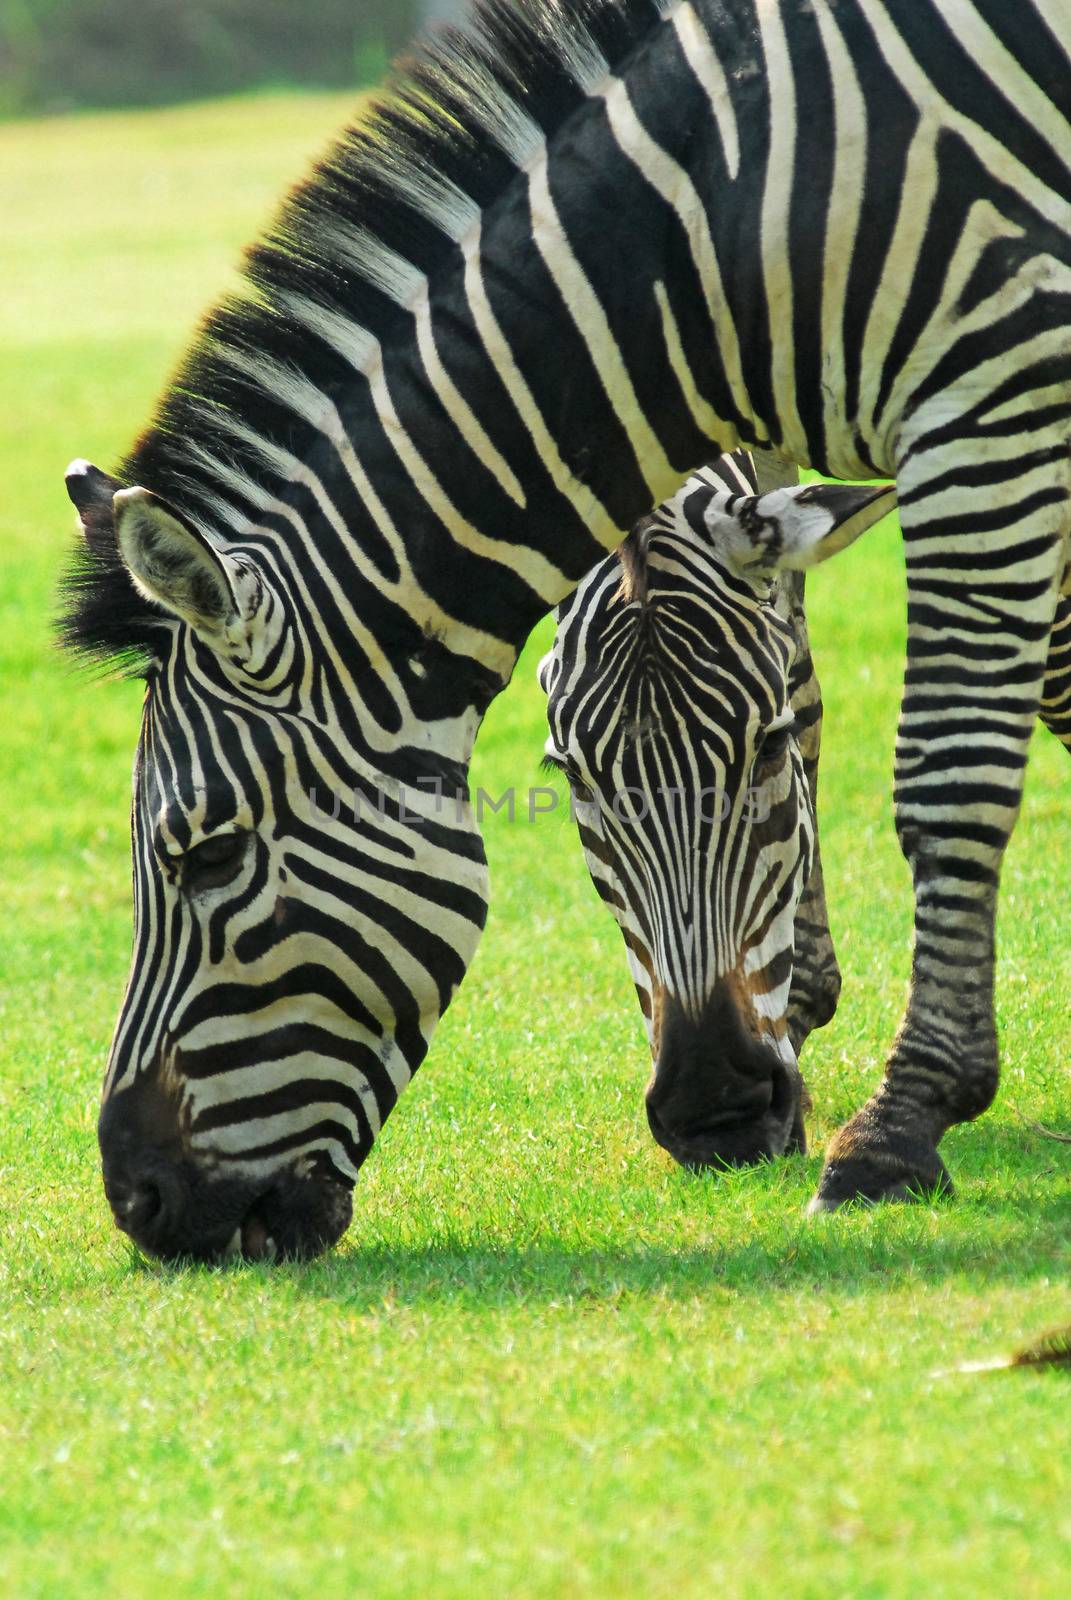 Zebra grazing in a green field